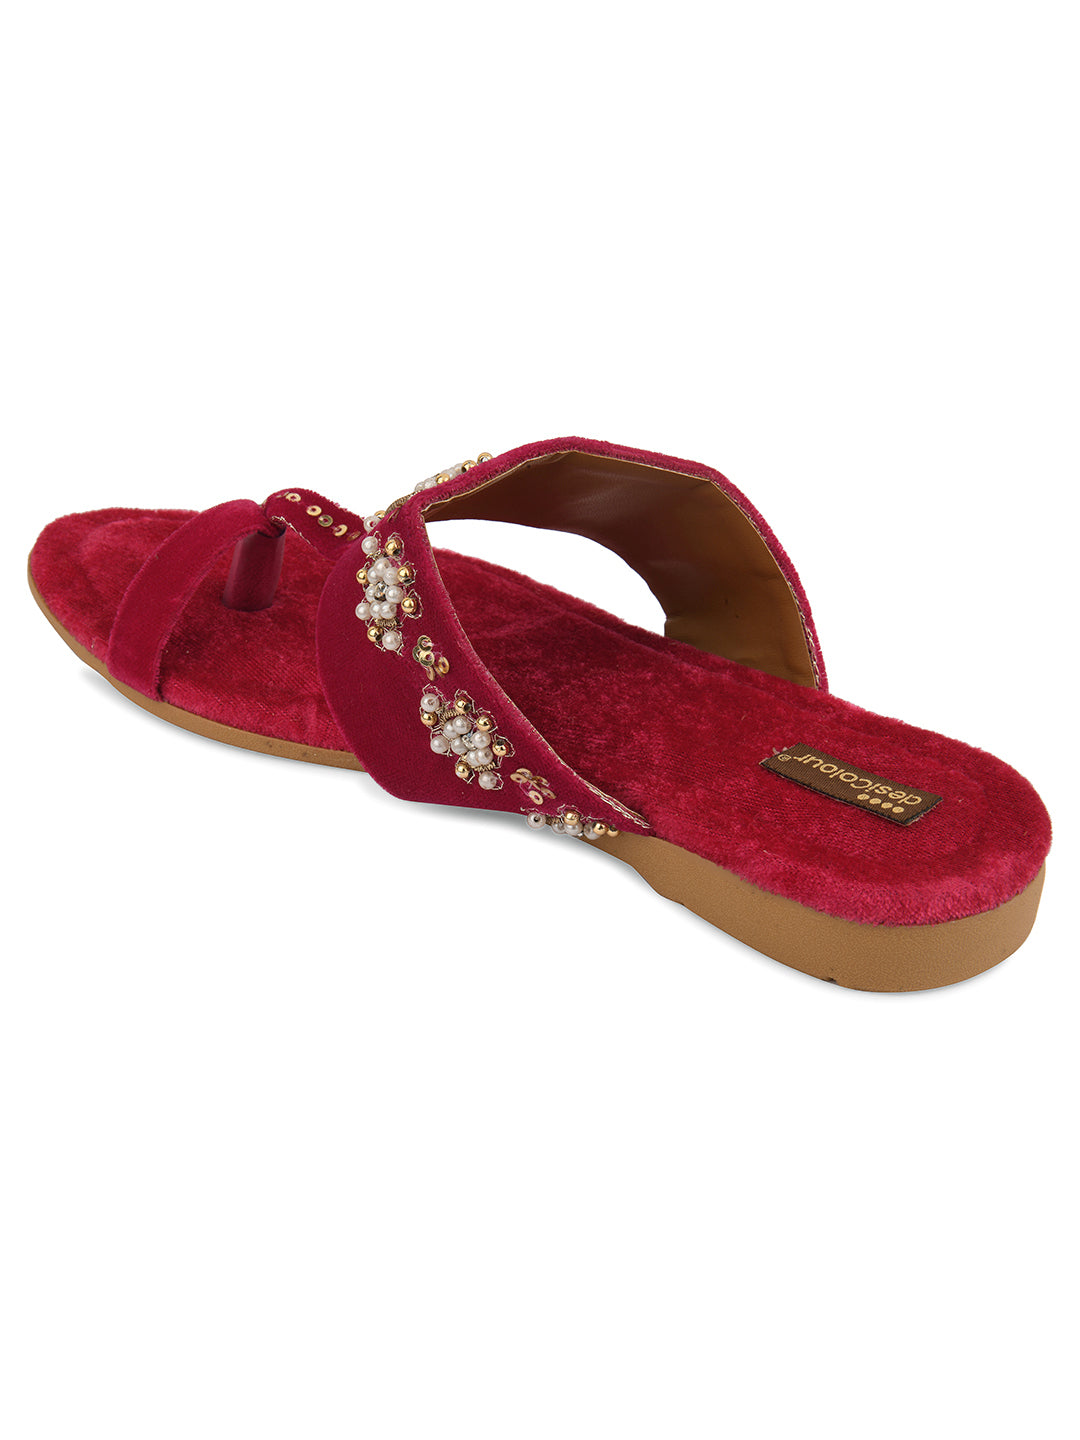 Women's Pink Slipper  Indian Ethnic Comfort Footwear - Desi Colour